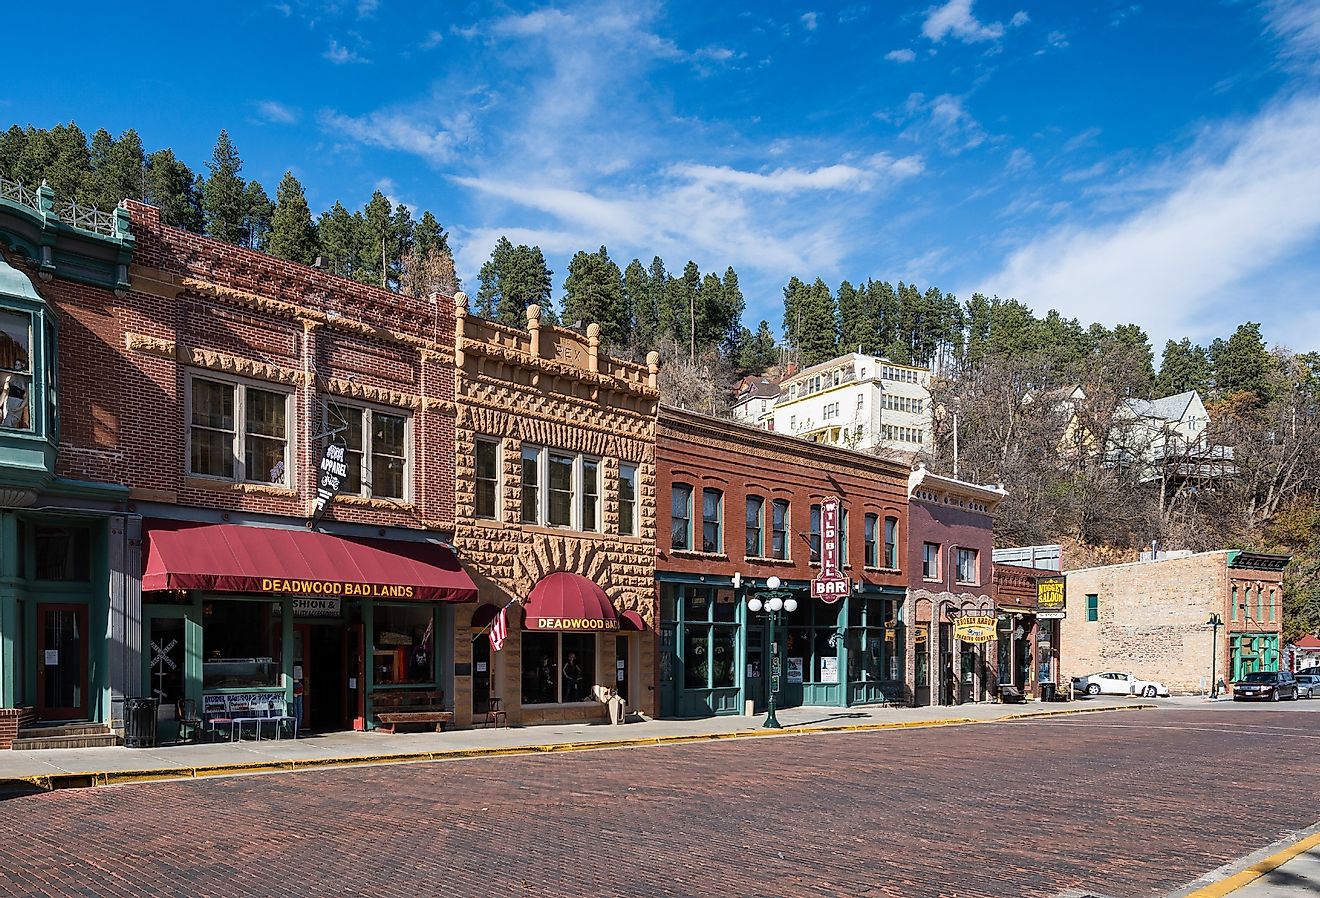 Historic downtown Main Street in Deadwood, South Dakota. Image credit Nagel Photography via Shutterstock